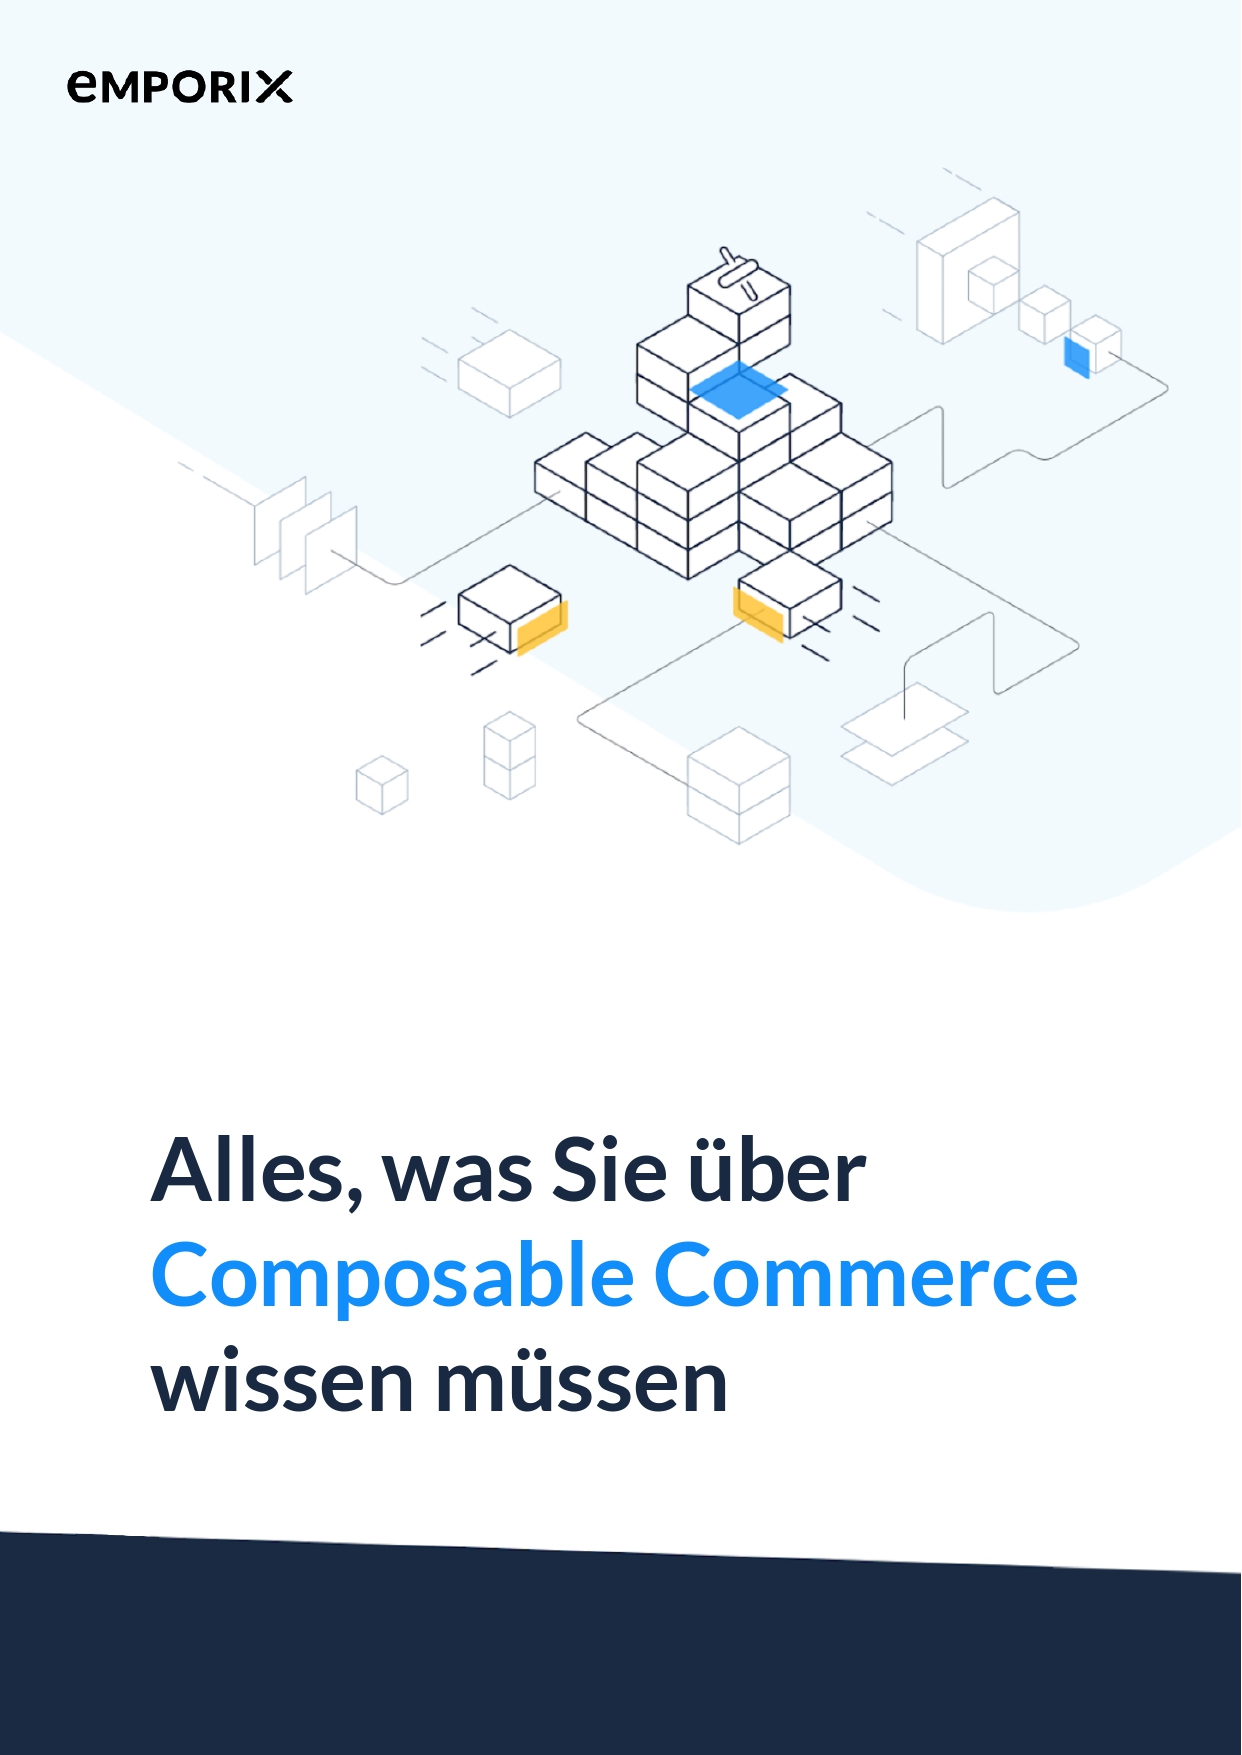 Emporix_Alles_was_Sie_über_Composable_Commerce-1_page-0001